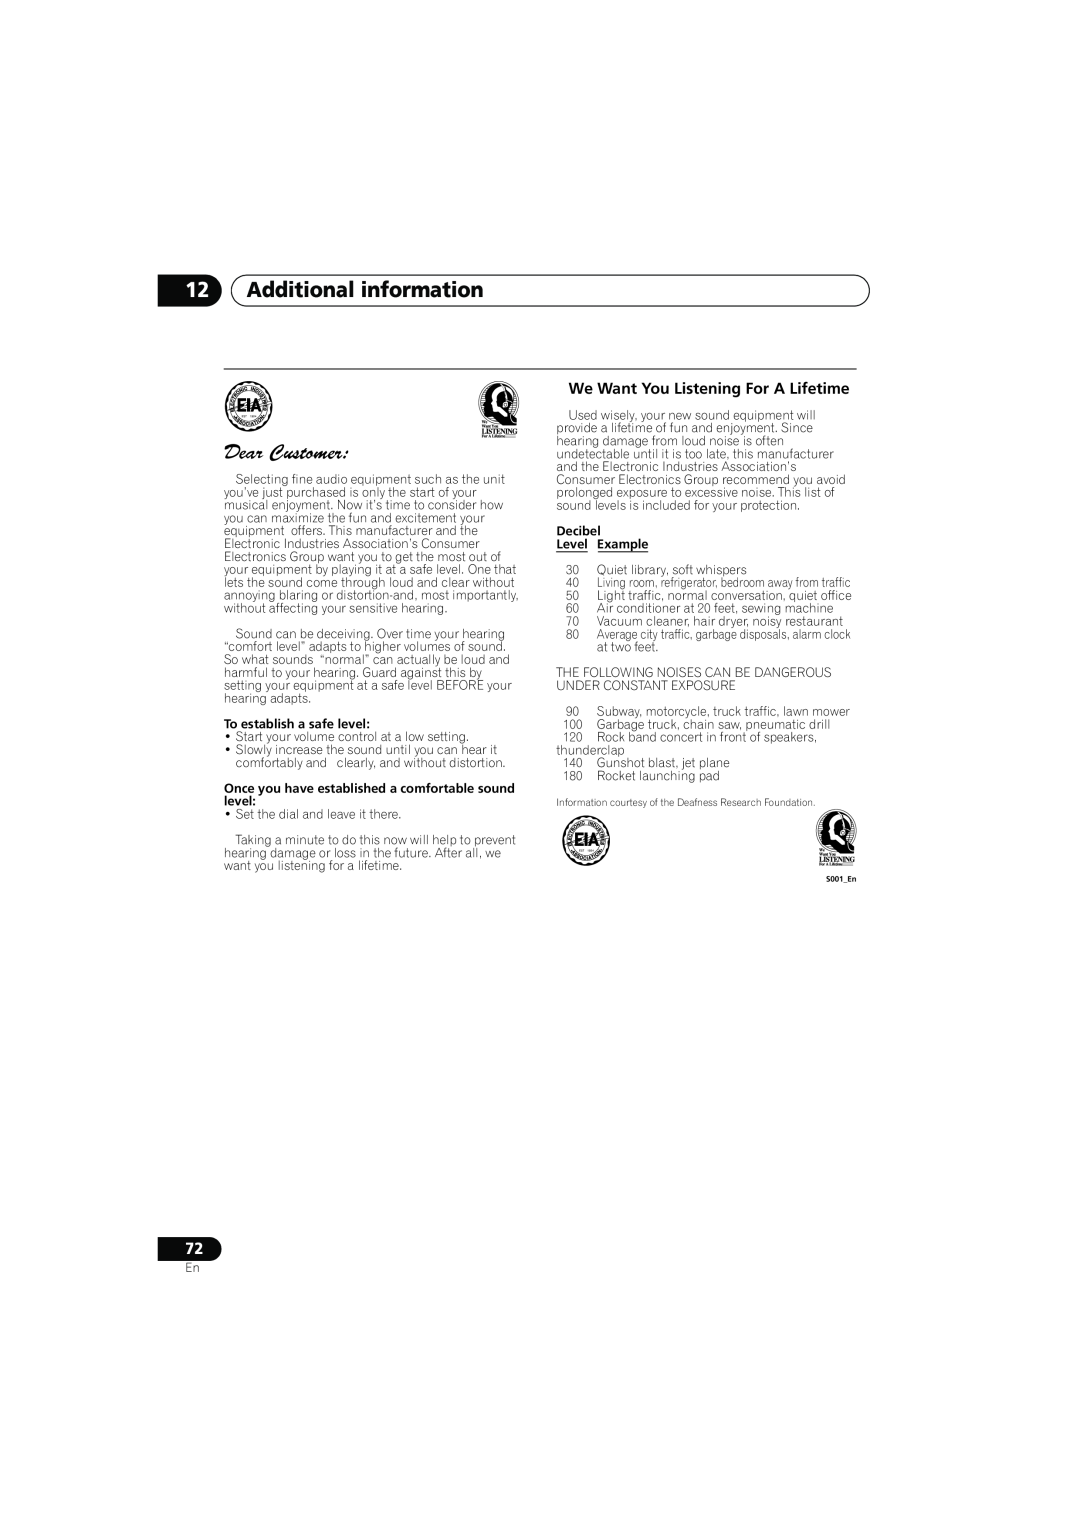 Pioneer VSX-917V manual We Want You Listening For A Lifetime, 12Additional information, To establish a safe level 